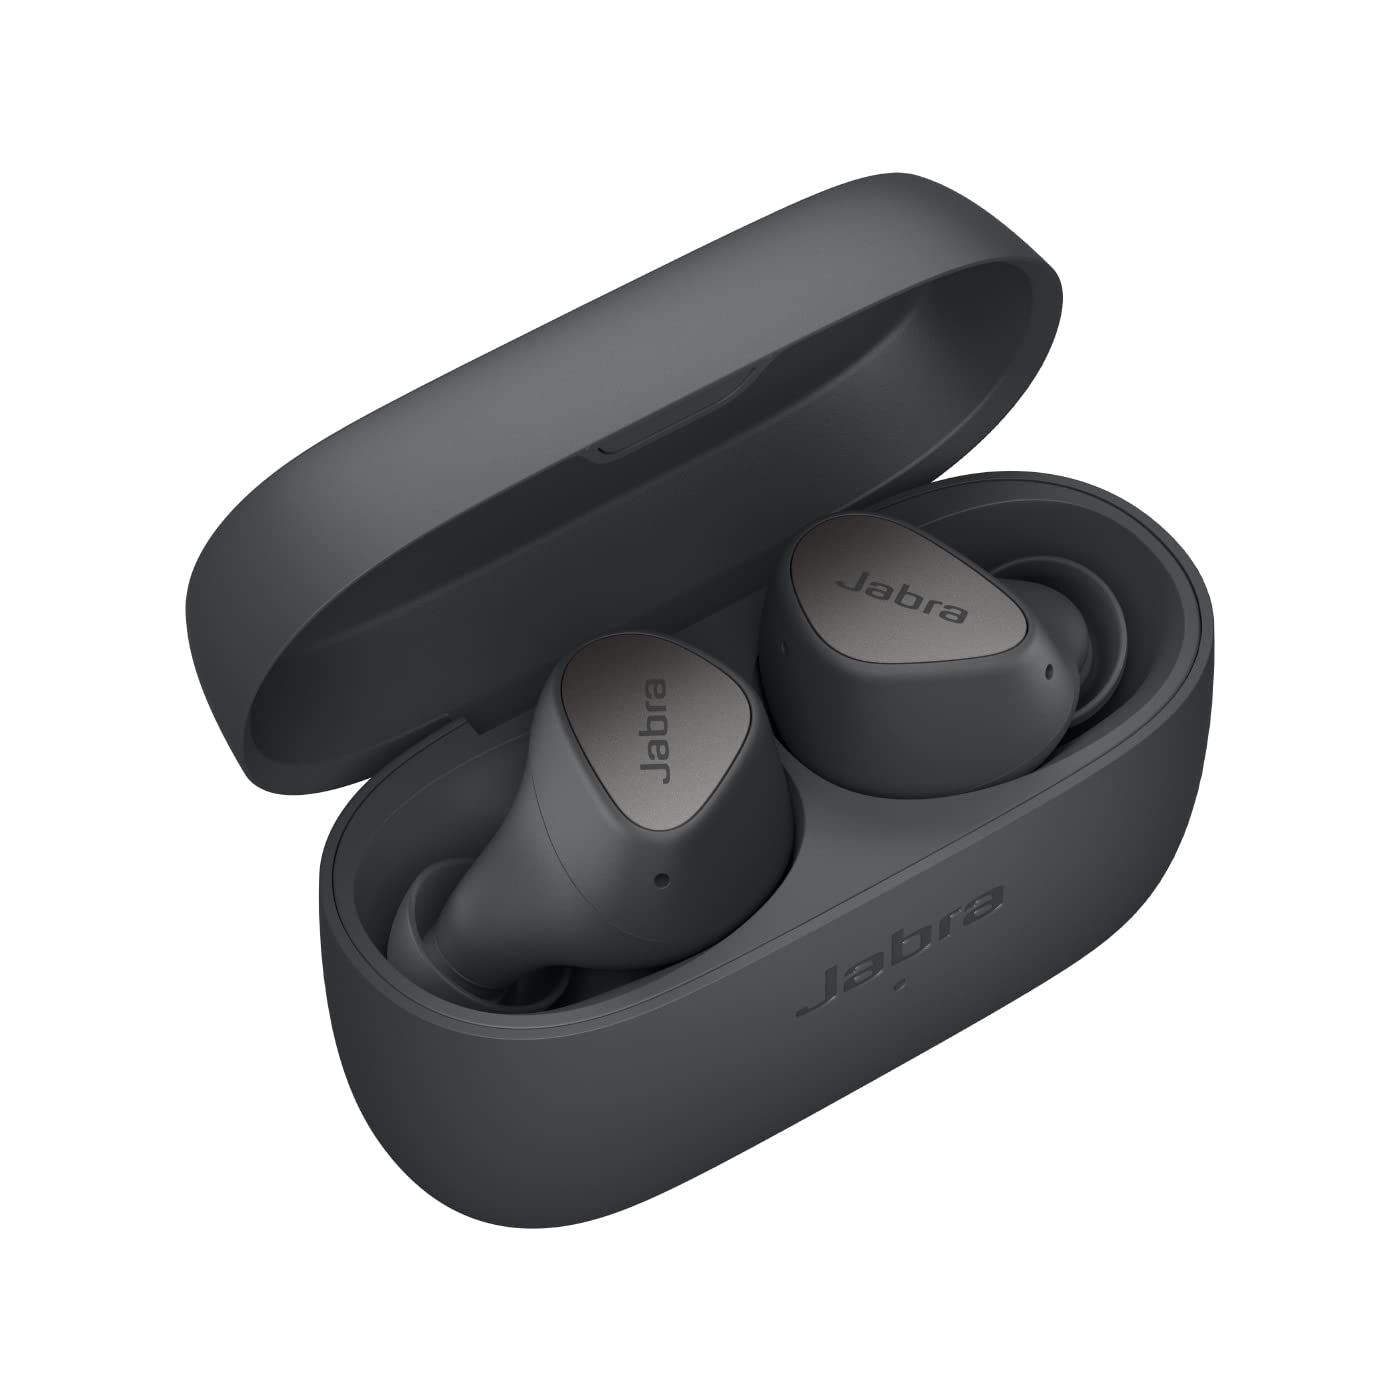  Jabra Elite 3 in Ear Wireless Bluetooth Earbuds - سماعات لاسلكية حقيقية عازلة للضوضاء مع 4 ميكروفونات مدمجة للمكالمات الواضحة والجهير...